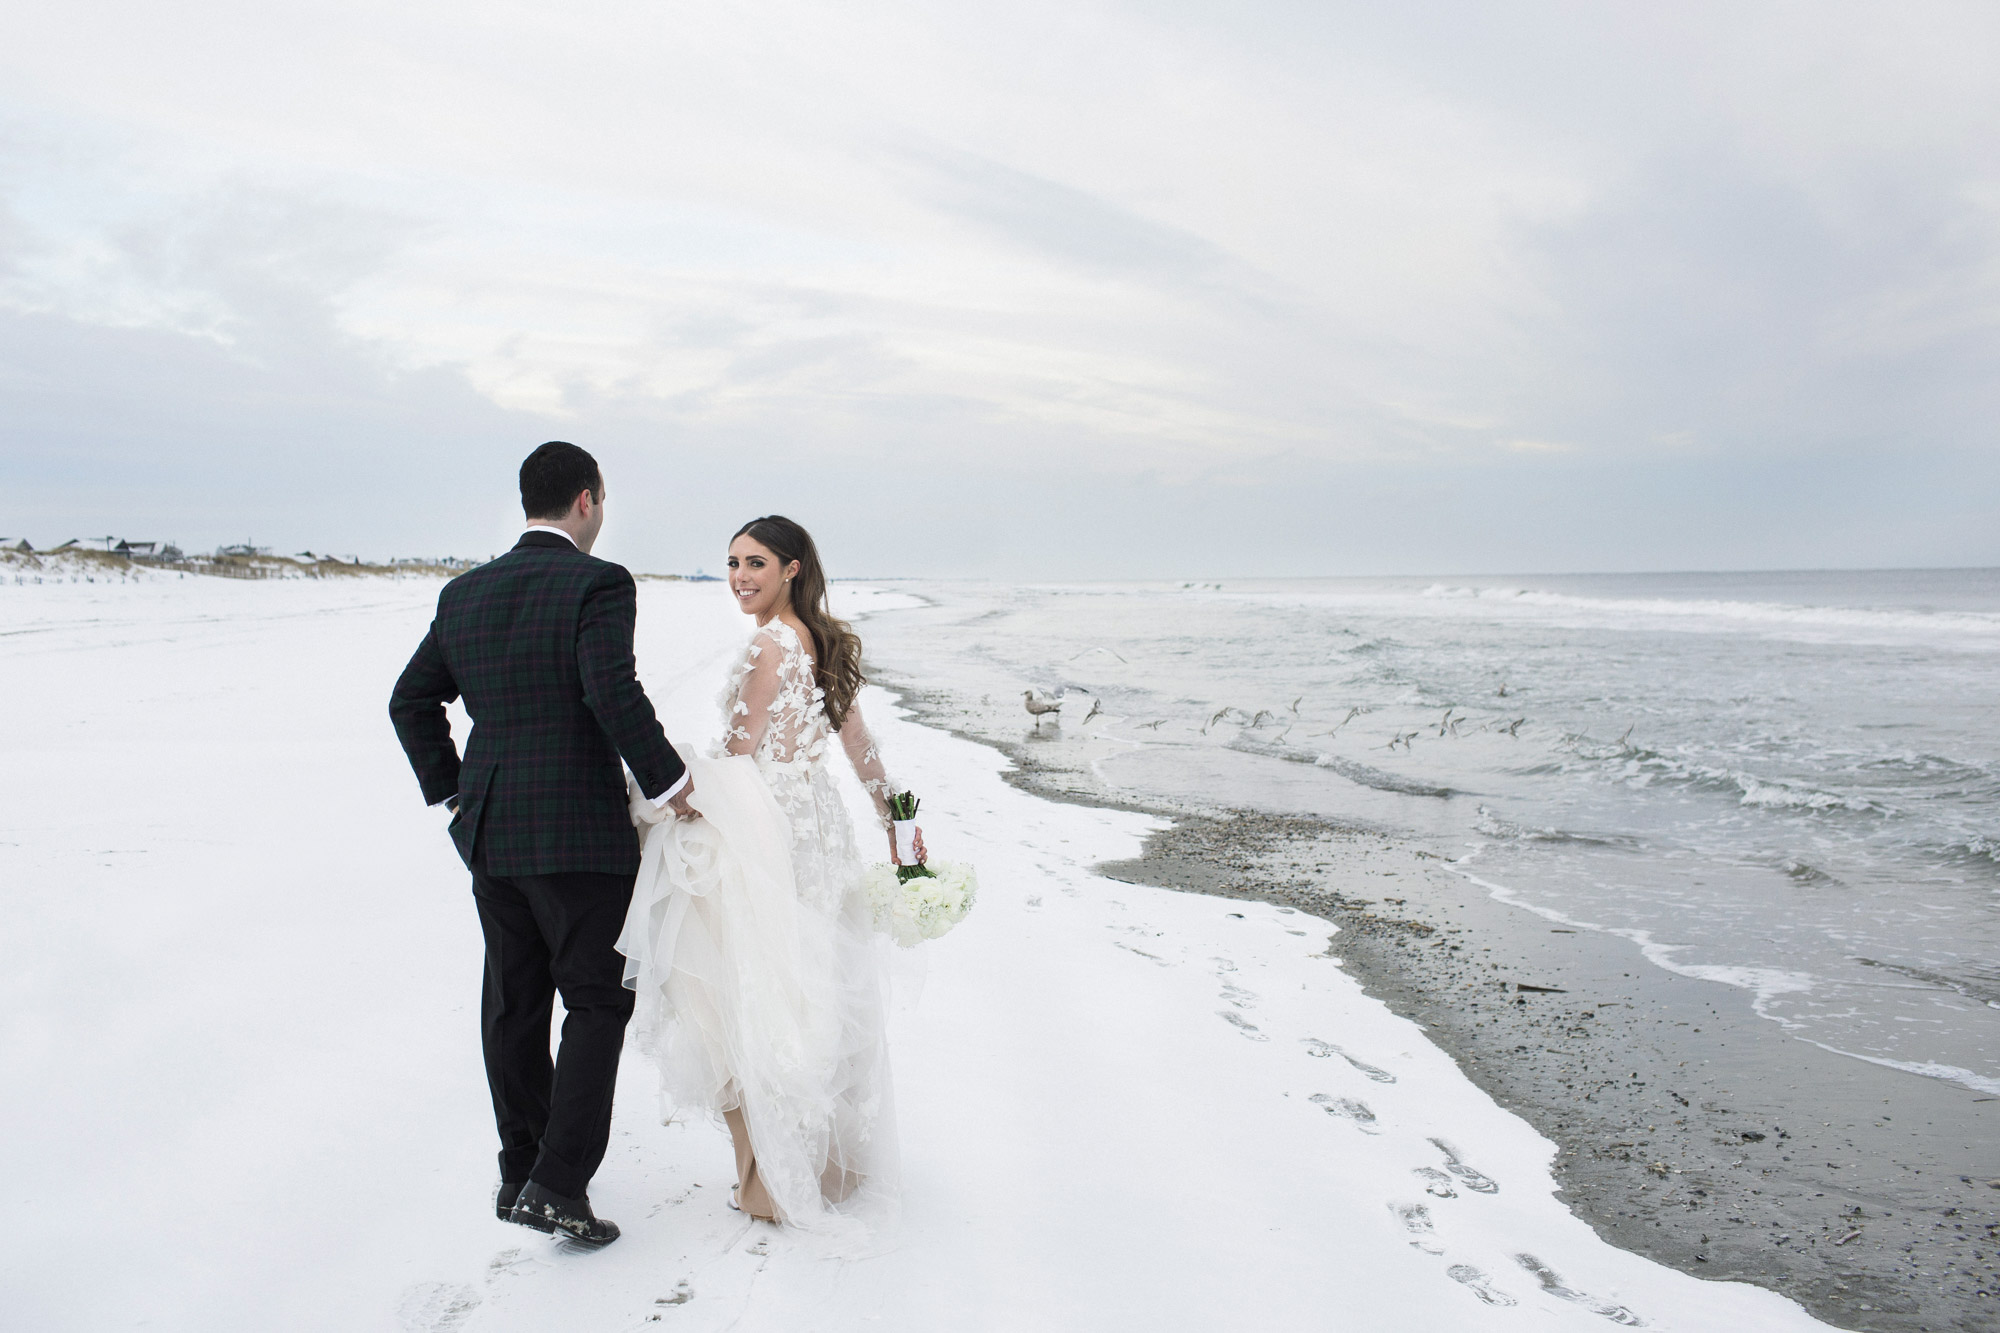 Winter wedding in Stone Harbor, New Jersey.